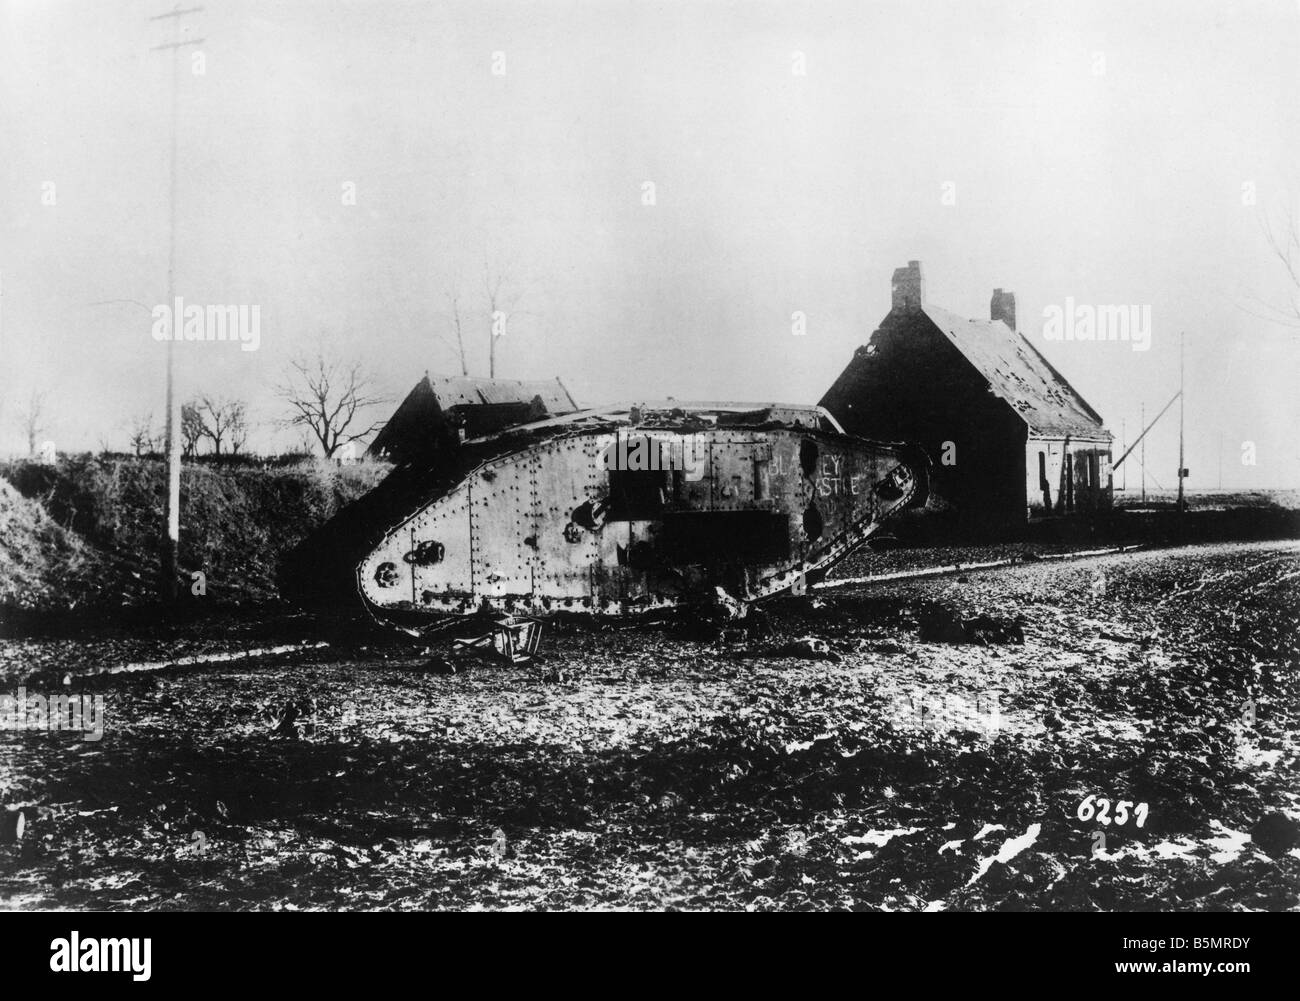 9 1917 11 20 A2 15 E Destroyed English tank Nov 1917 World War 1 1914 18 Western Front Tank battle at Cambrai 20th 29th Novem be Stock Photo